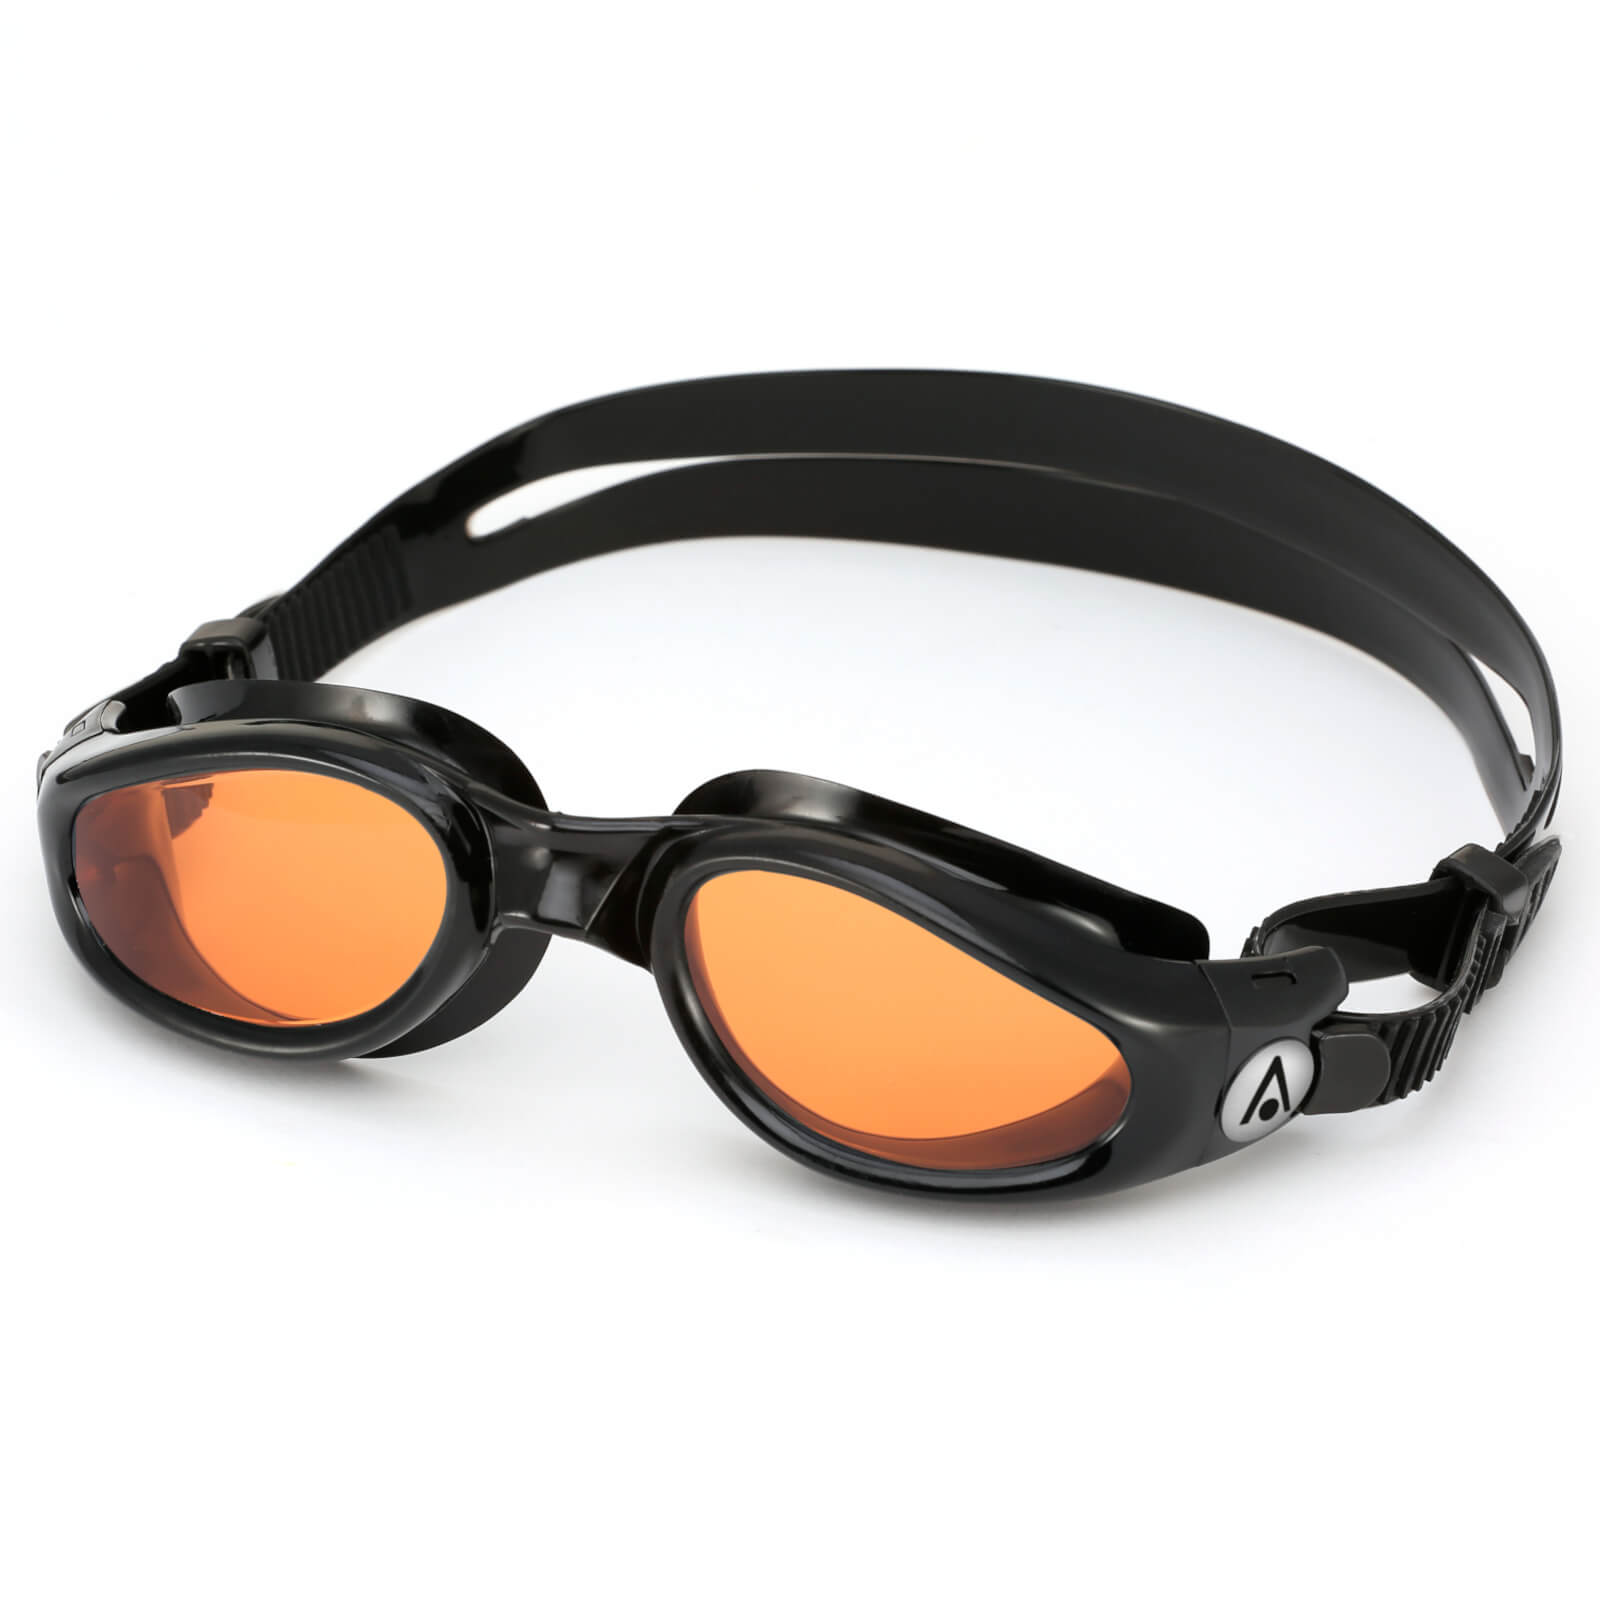 Men's Swimming Goggles Aqua Sphere Kaiman Adult Fitness Pool Black - Amber Tinted